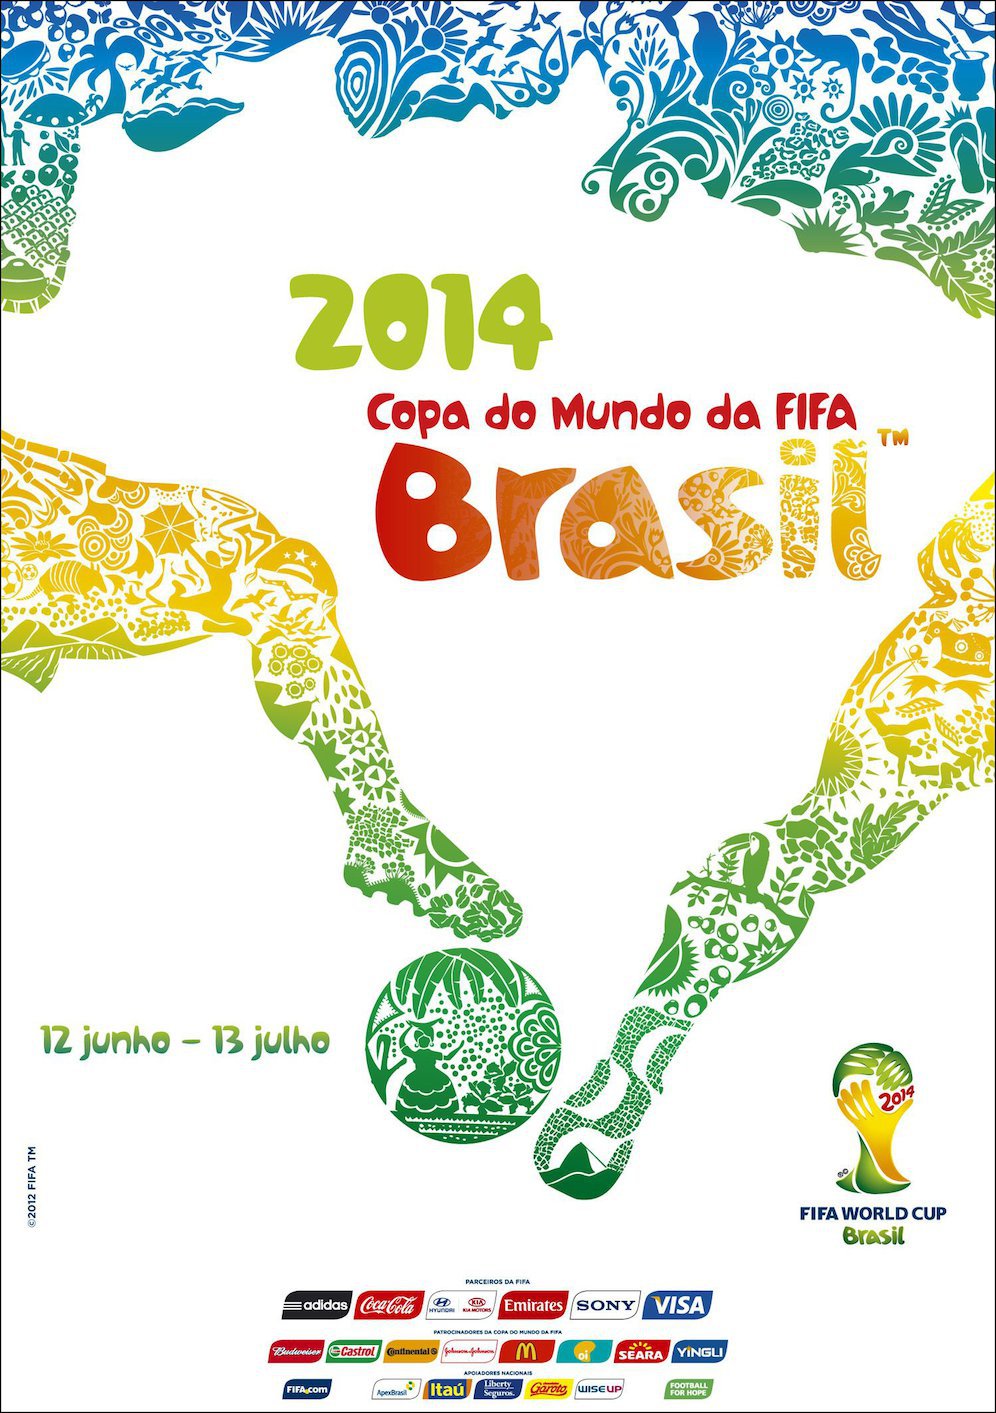 Kilas Balik Piala Dunia 2014 Brasil Bola Net